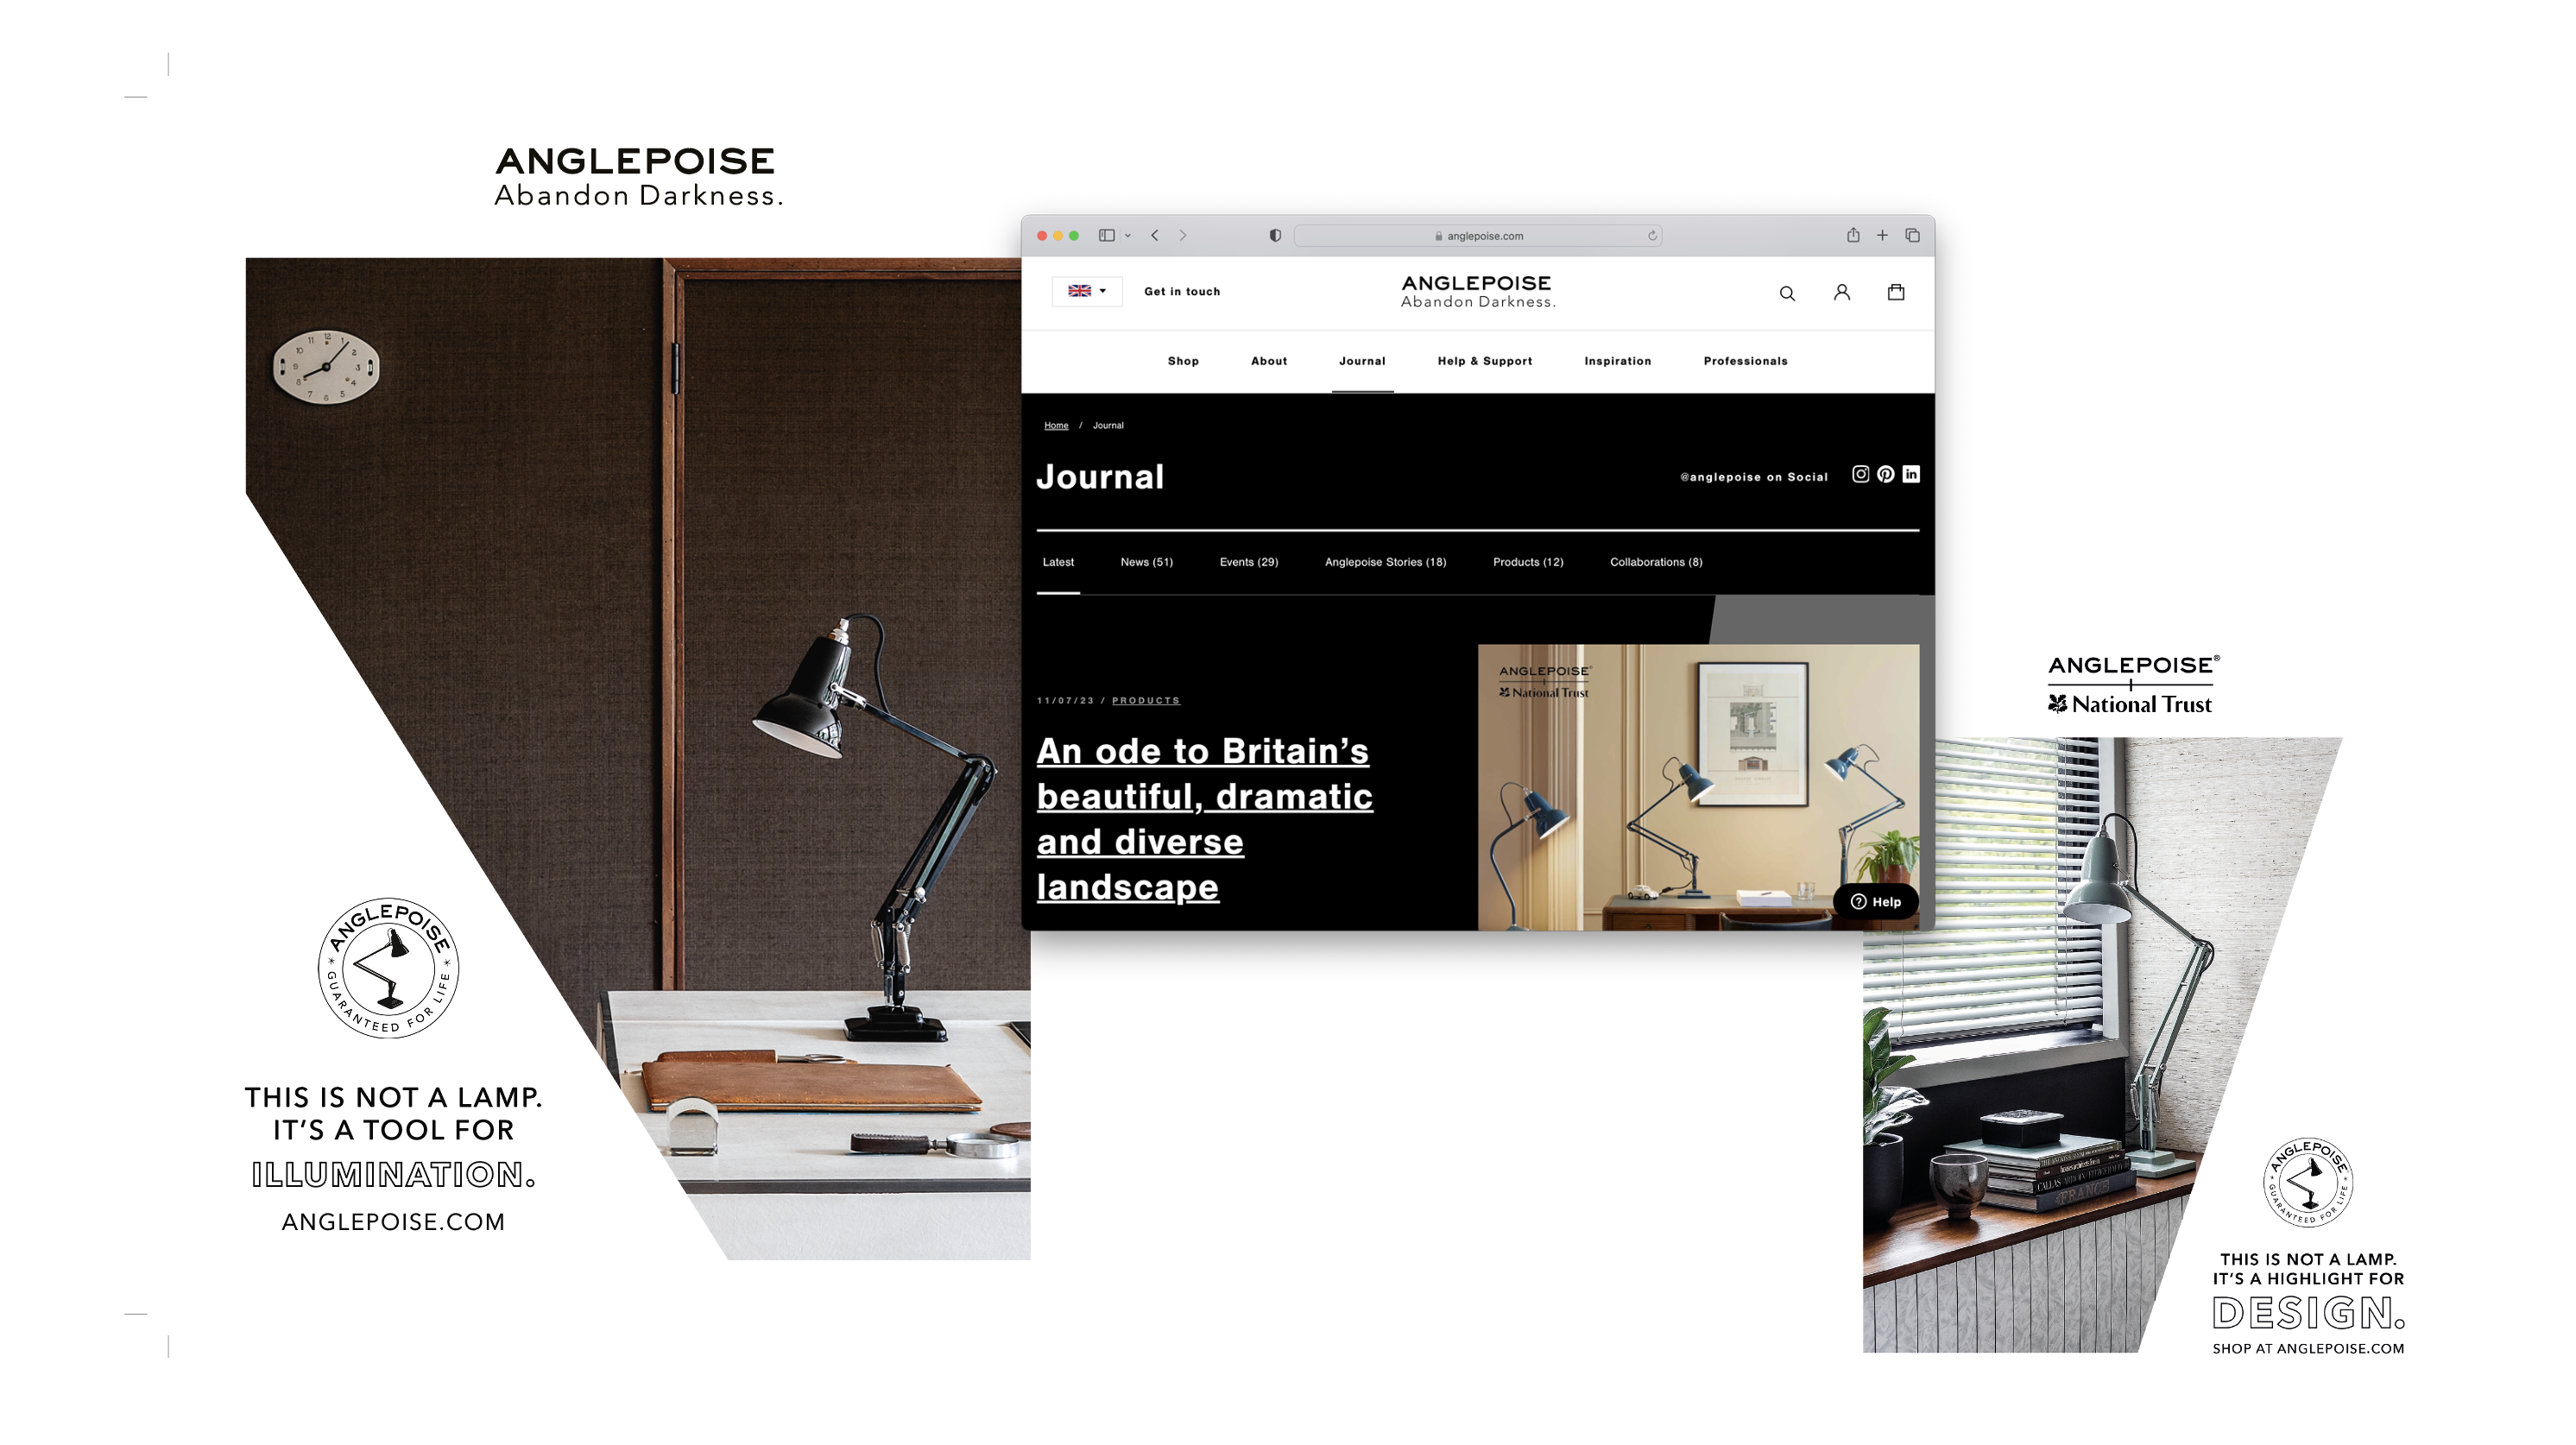 Print ads and websites journal screenshot of angular work with Anglepoise